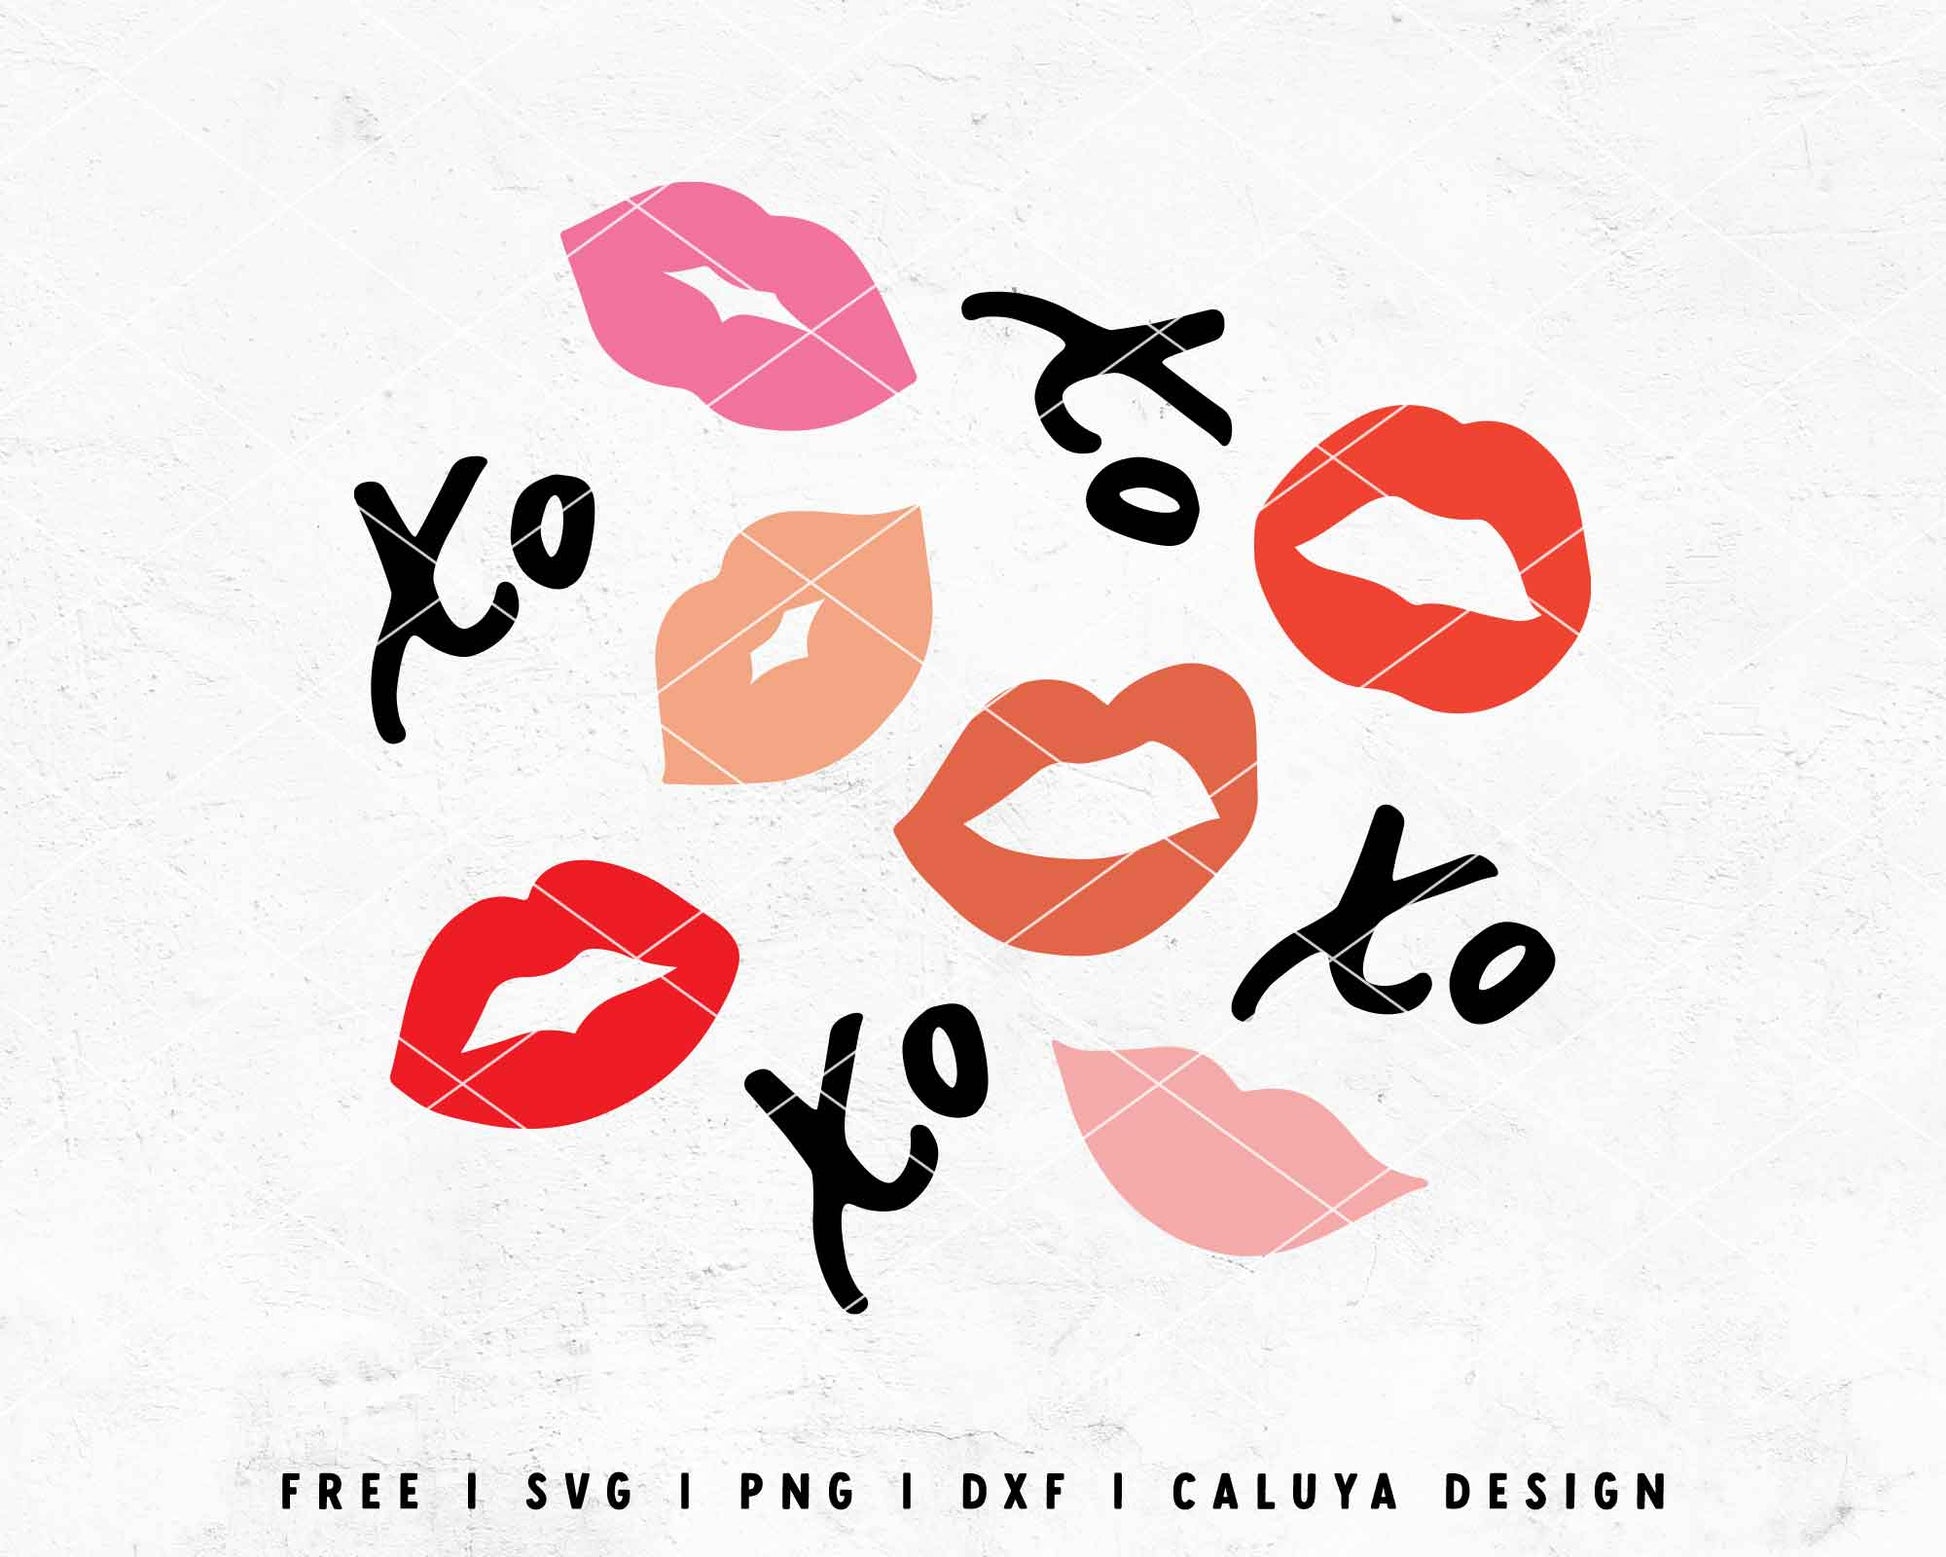 FREE Lips SVG | xo SVG | Valentine's Day SVG Cut File for Cricut, Cameo Silhouette | Free SVG Cut File